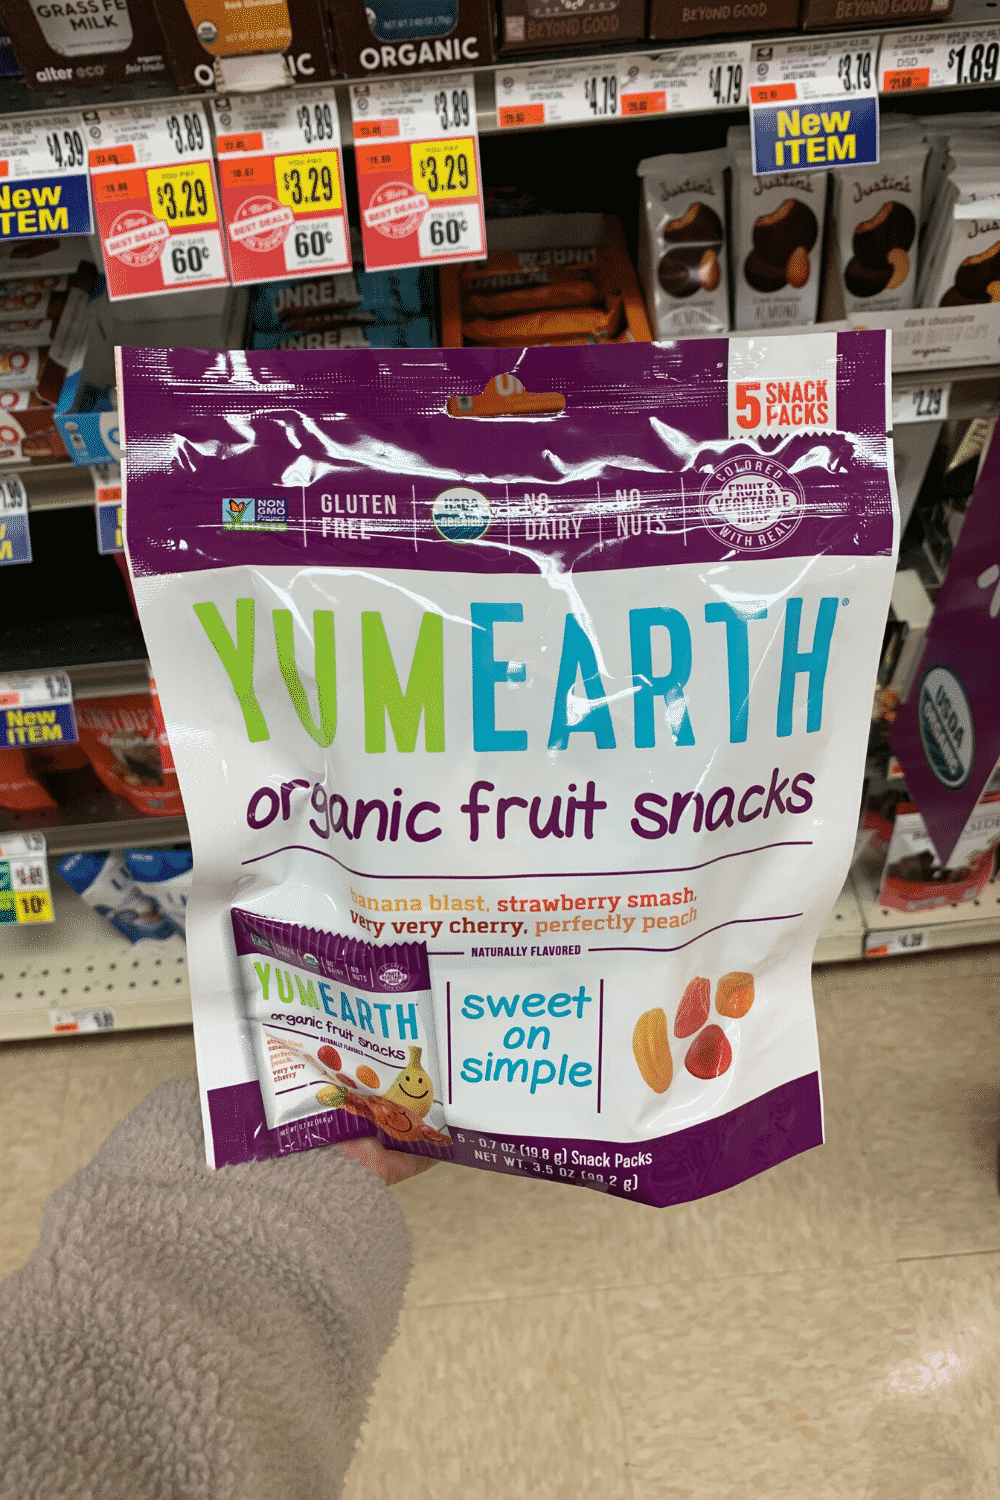 A hand holding a bag of YumEarth organic fruits snacks